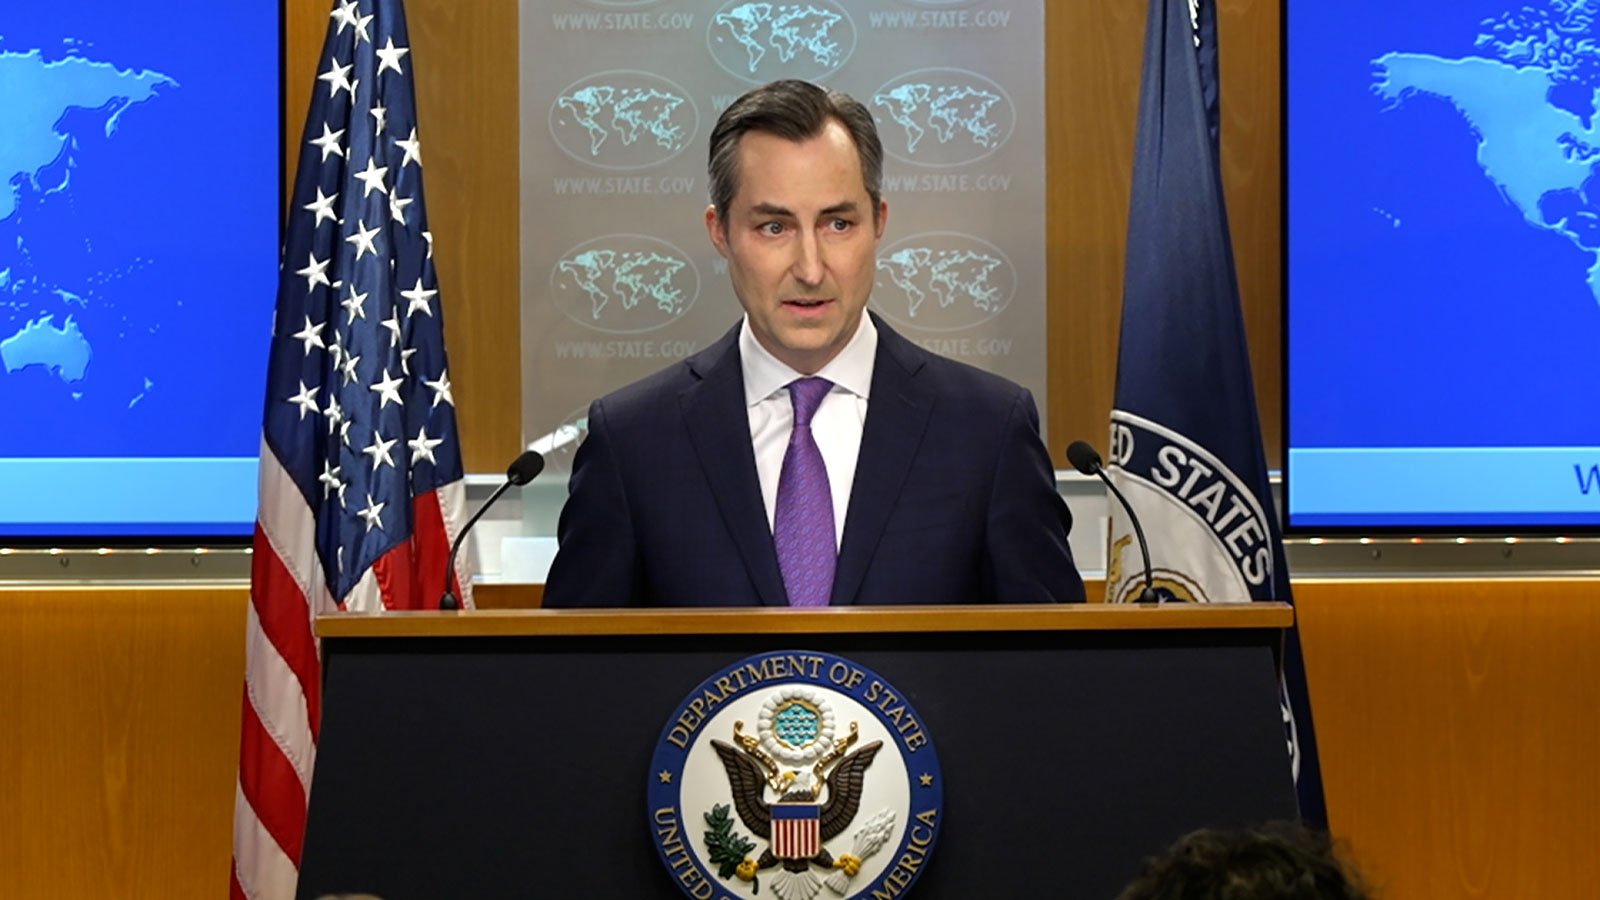  State Department spokesperson Matthew Miller speaks during a briefing on Monday, March 4.